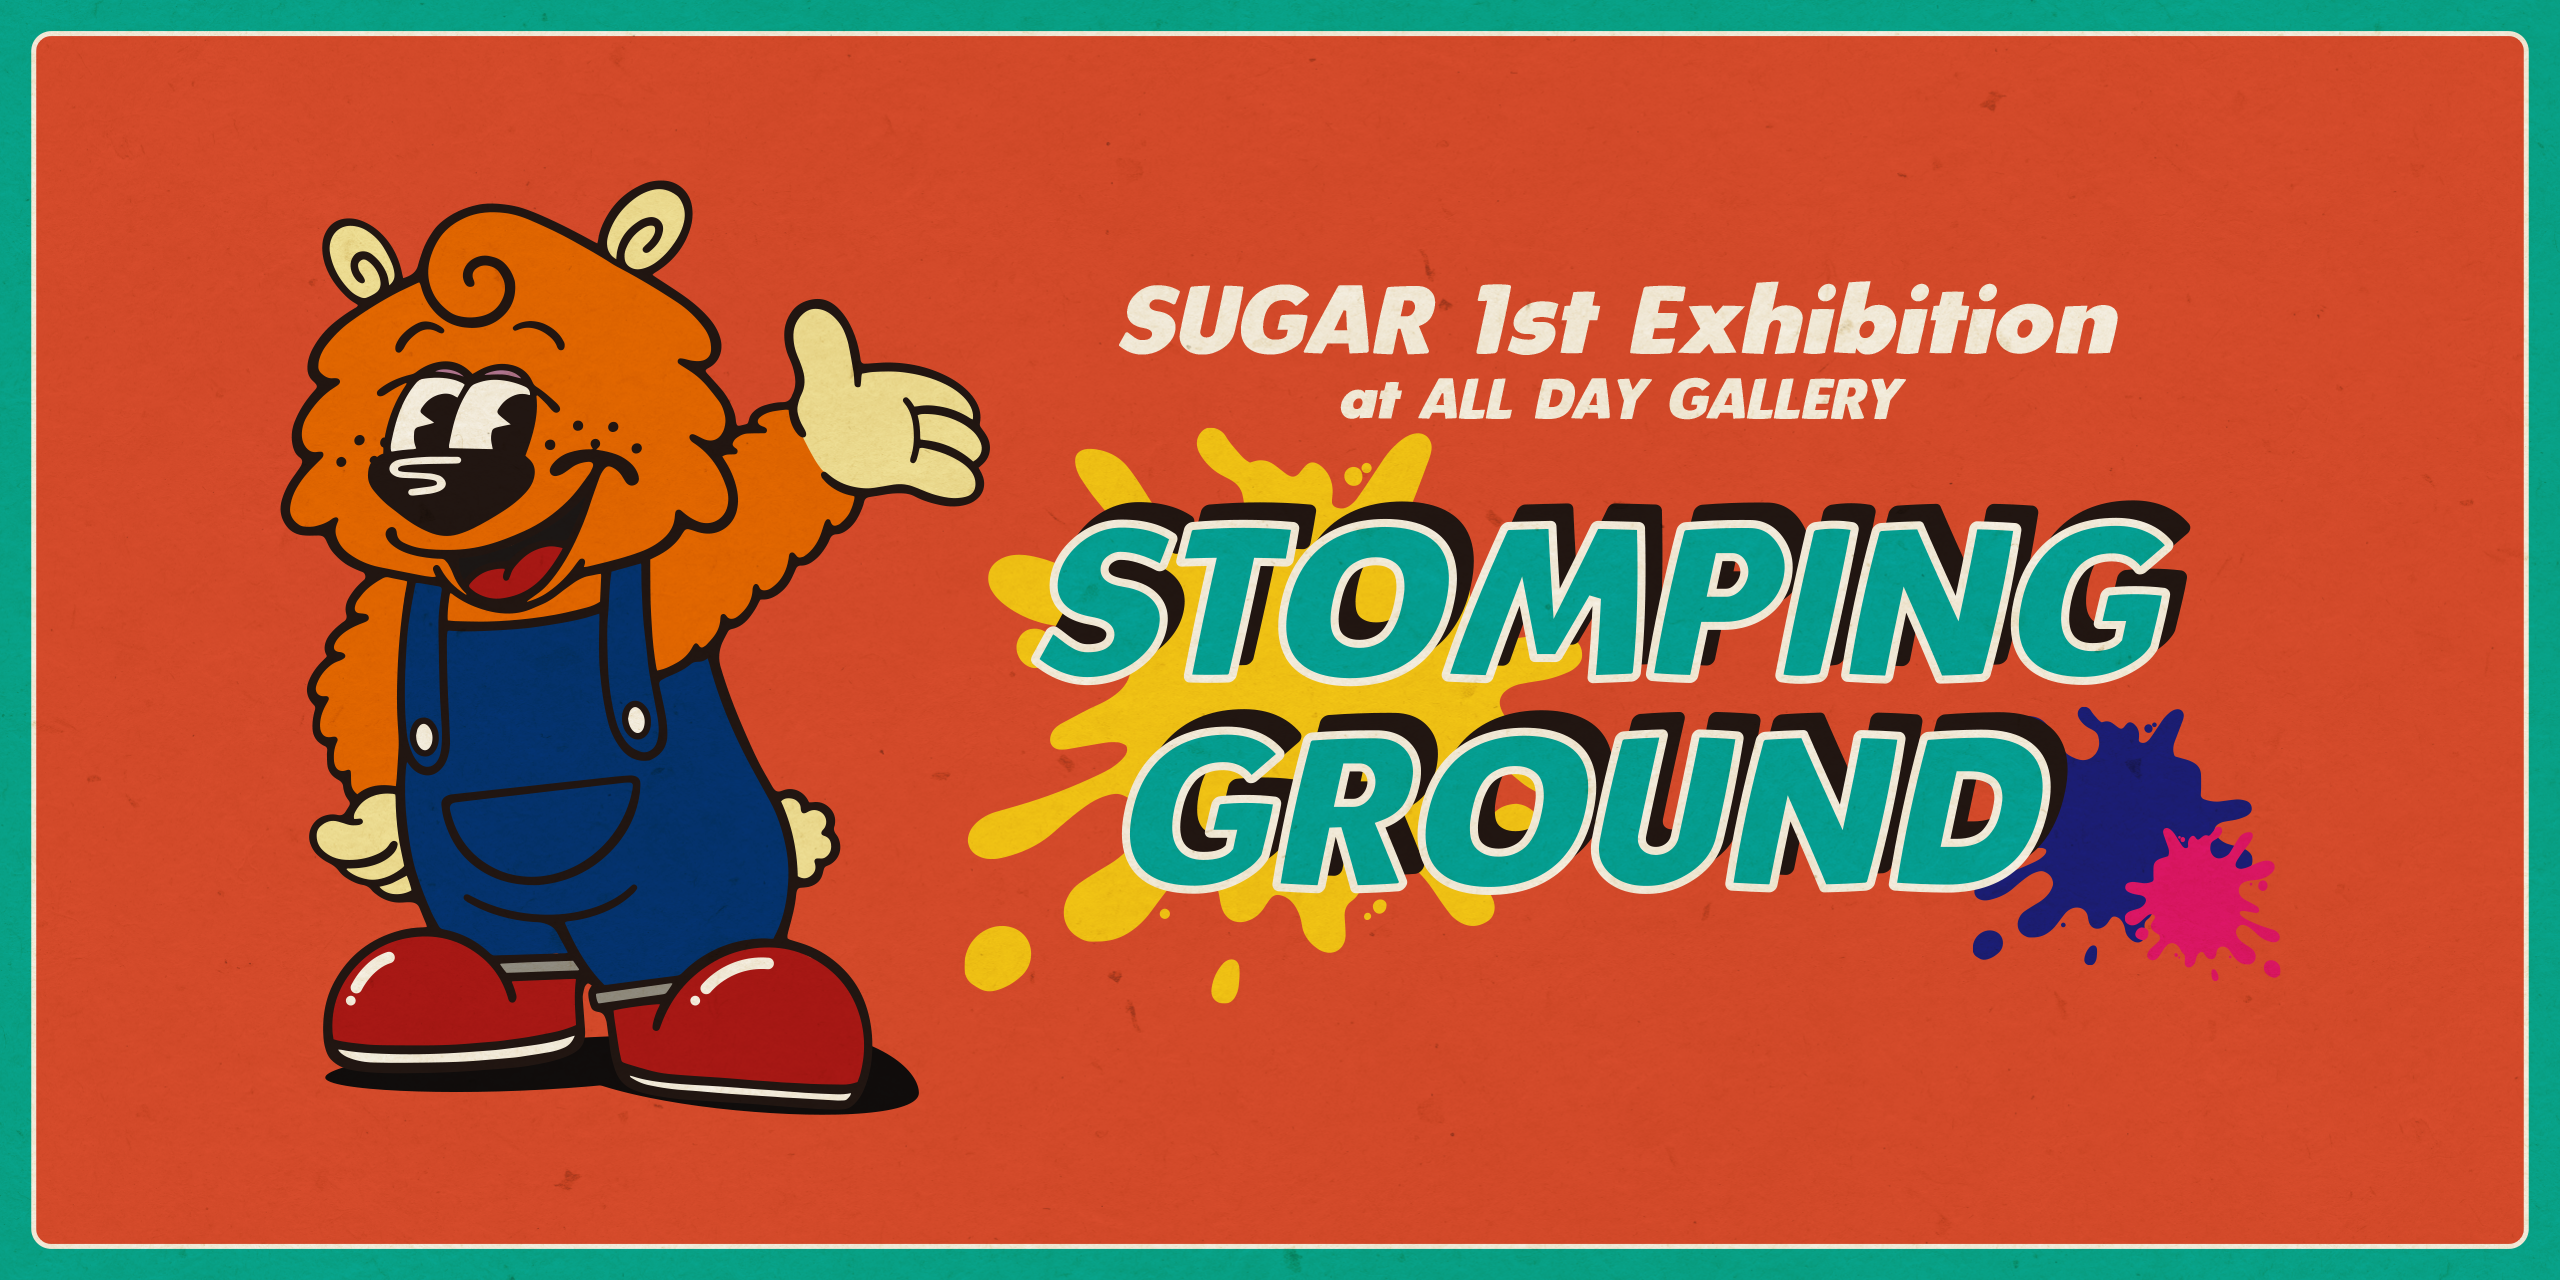 SUGAR 1st Exhibition  “STOMPING GROUND”